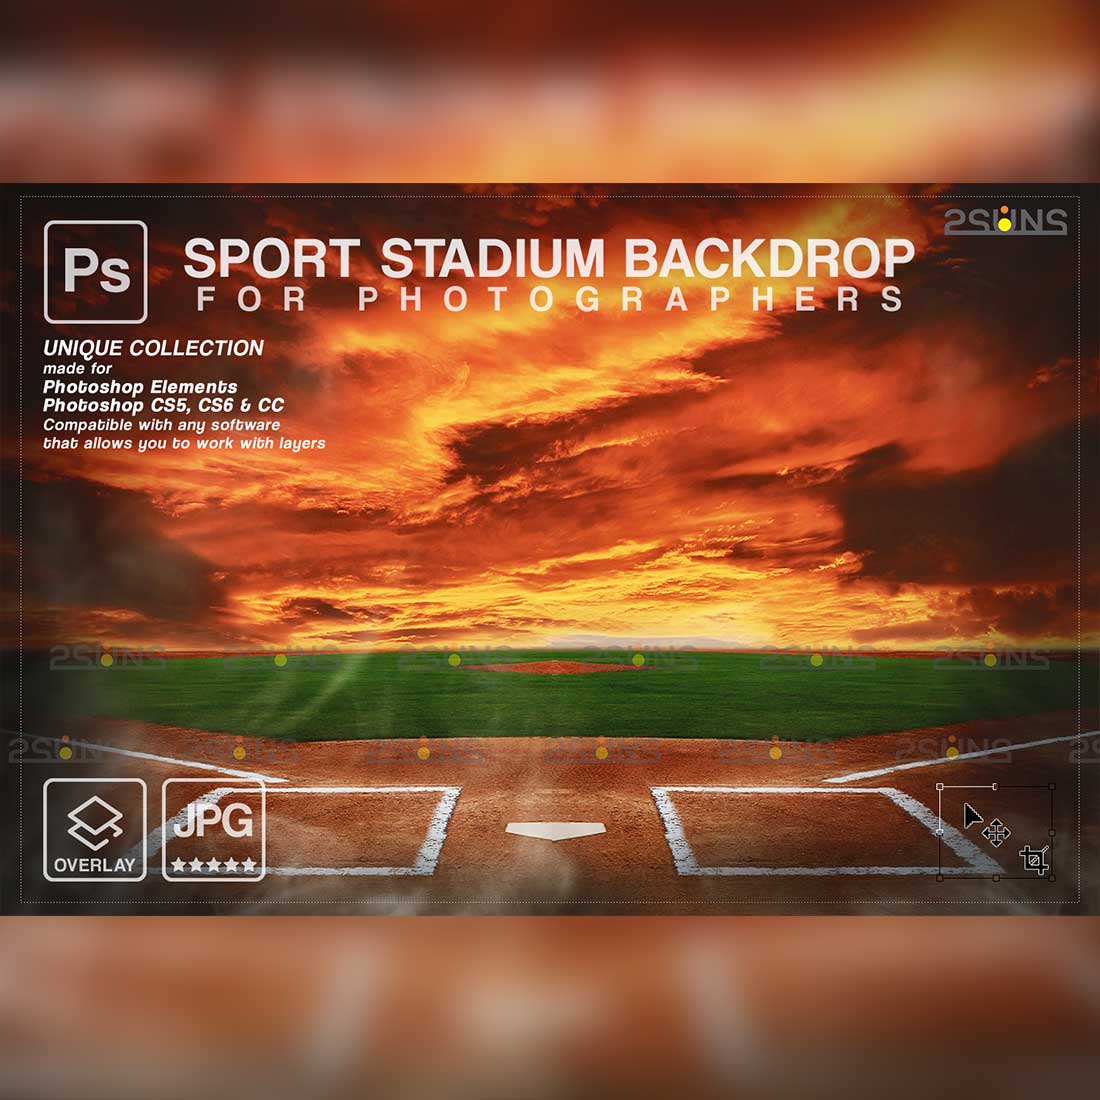 Baseball Backdrop Sports Digital Photoshop Background Preview Image.